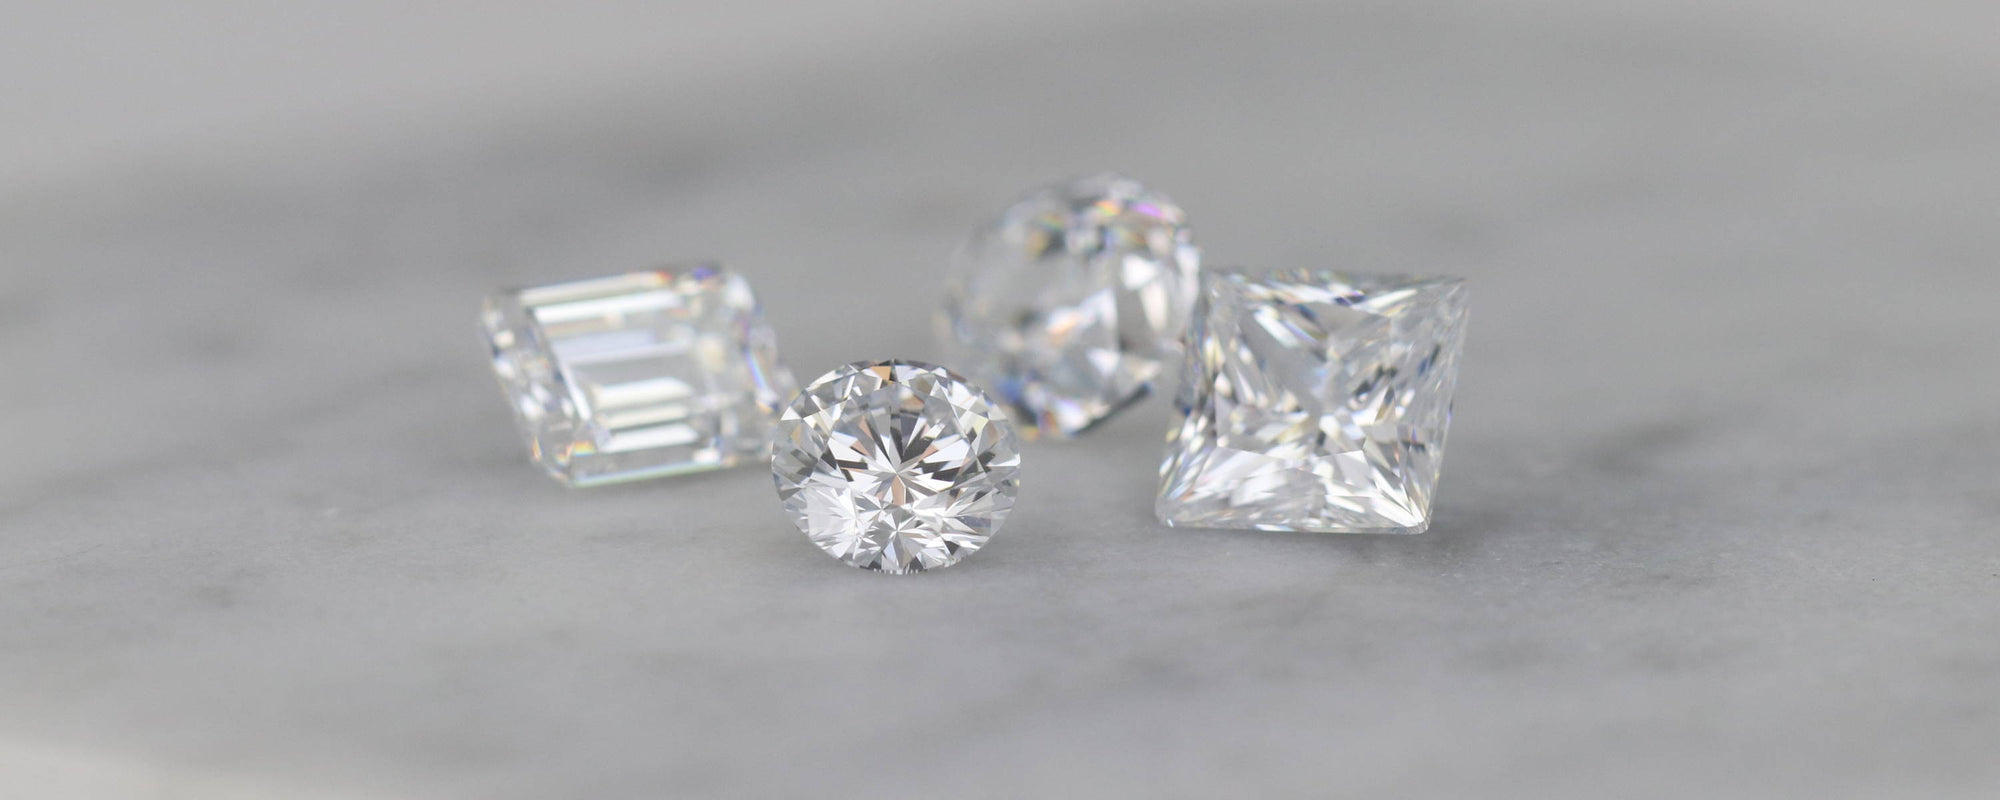 Lab Created Diamonds vs. Diamond Simulants